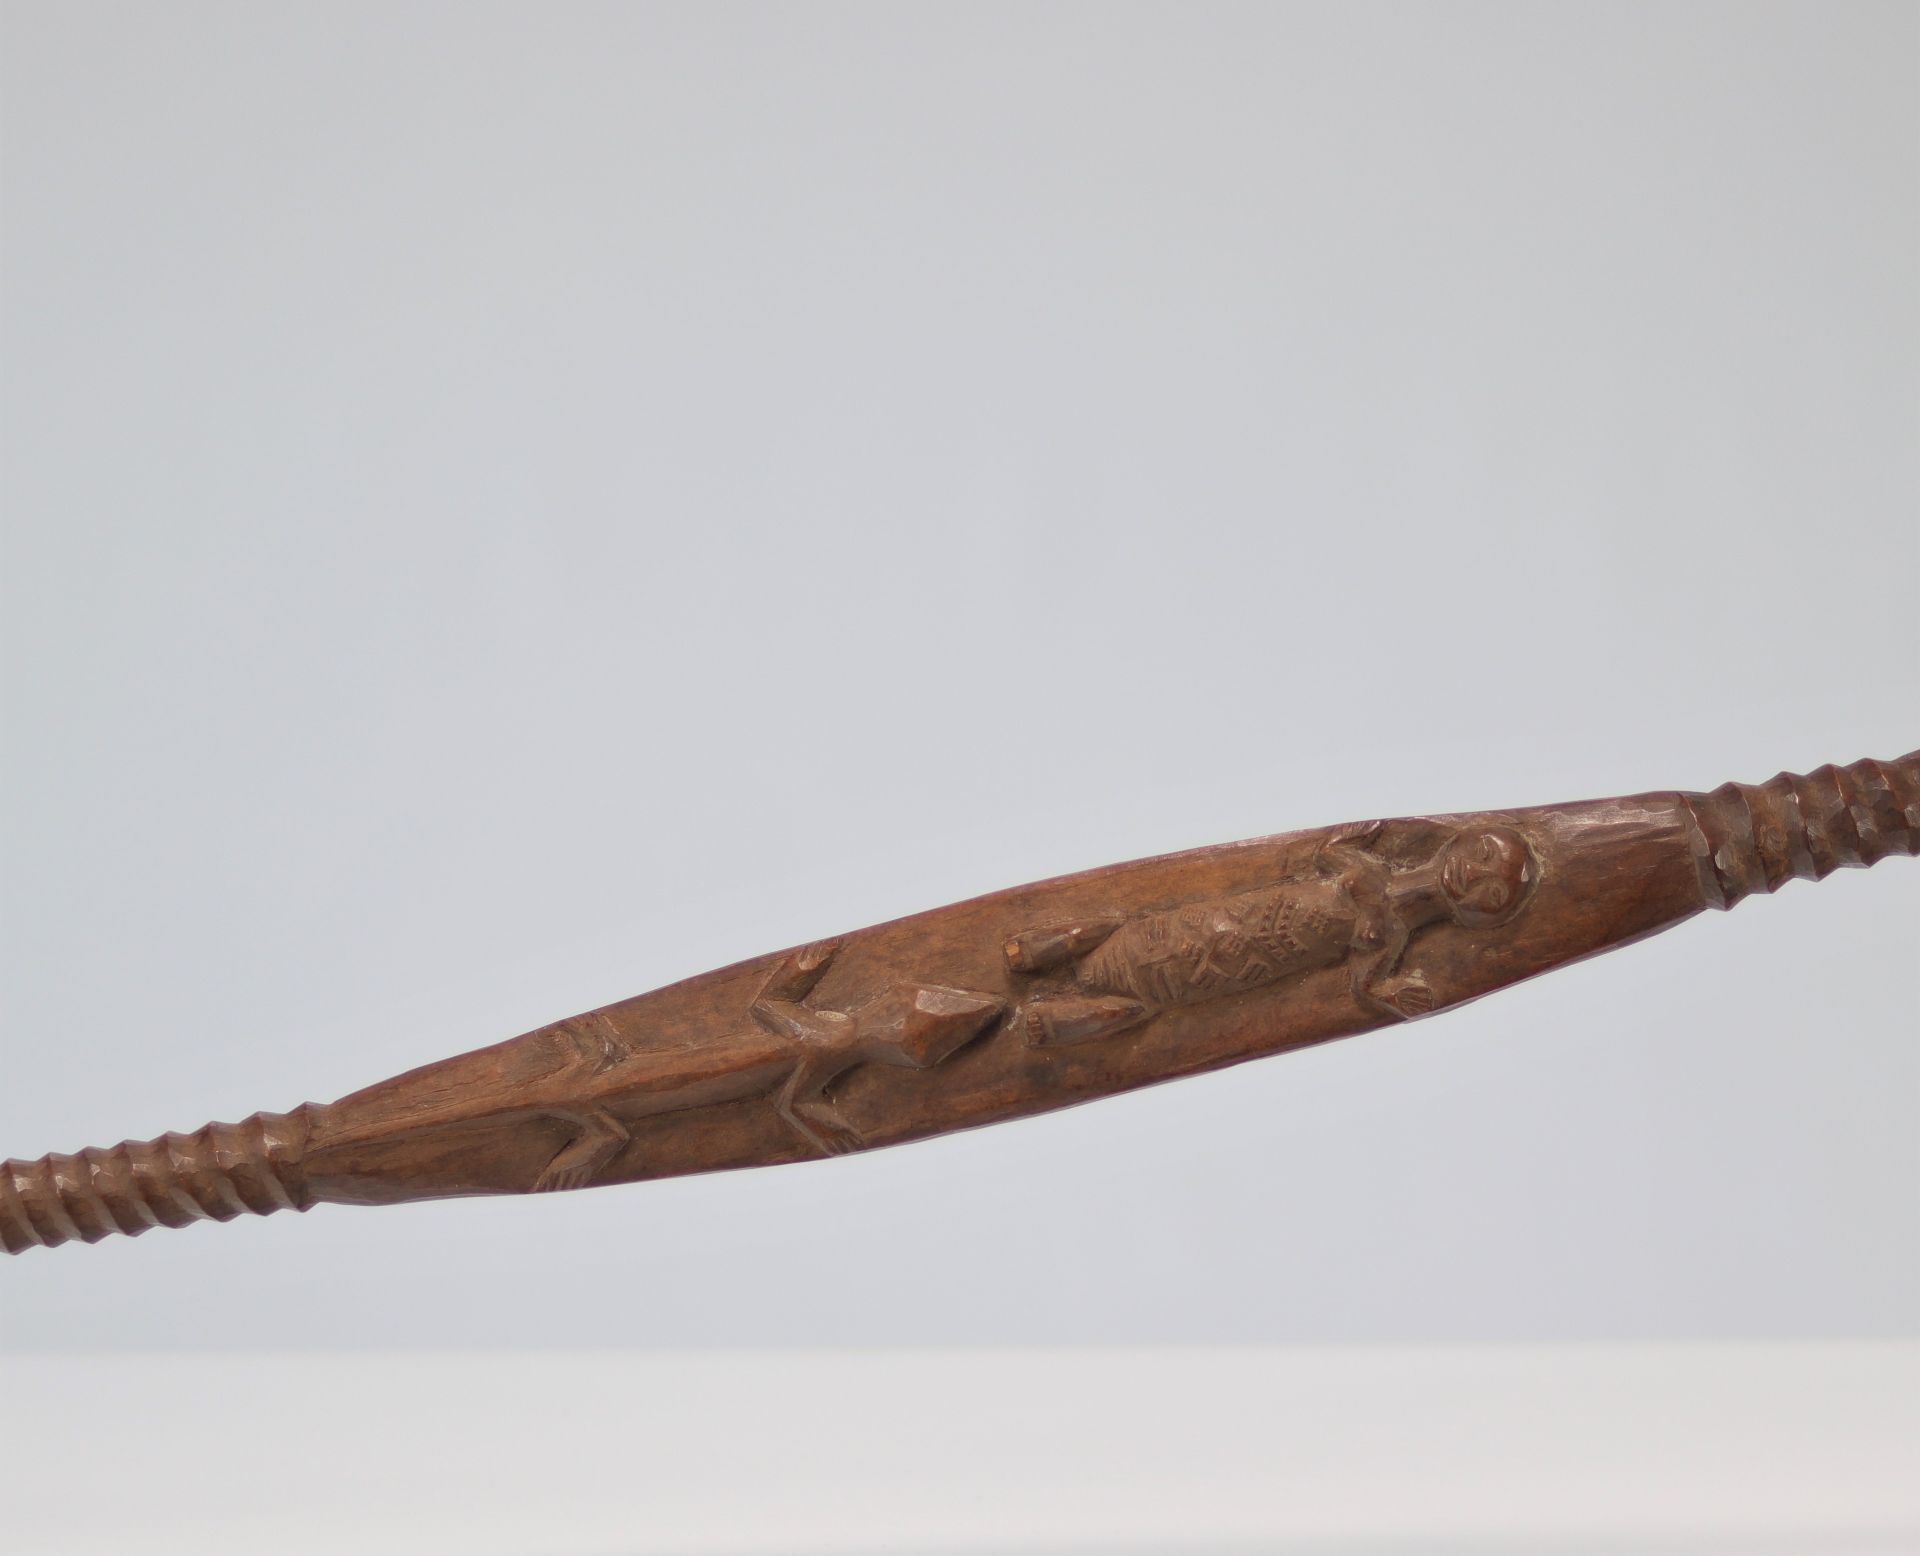 Luba Shankadi scepter surmounted by a figure - Image 6 of 6